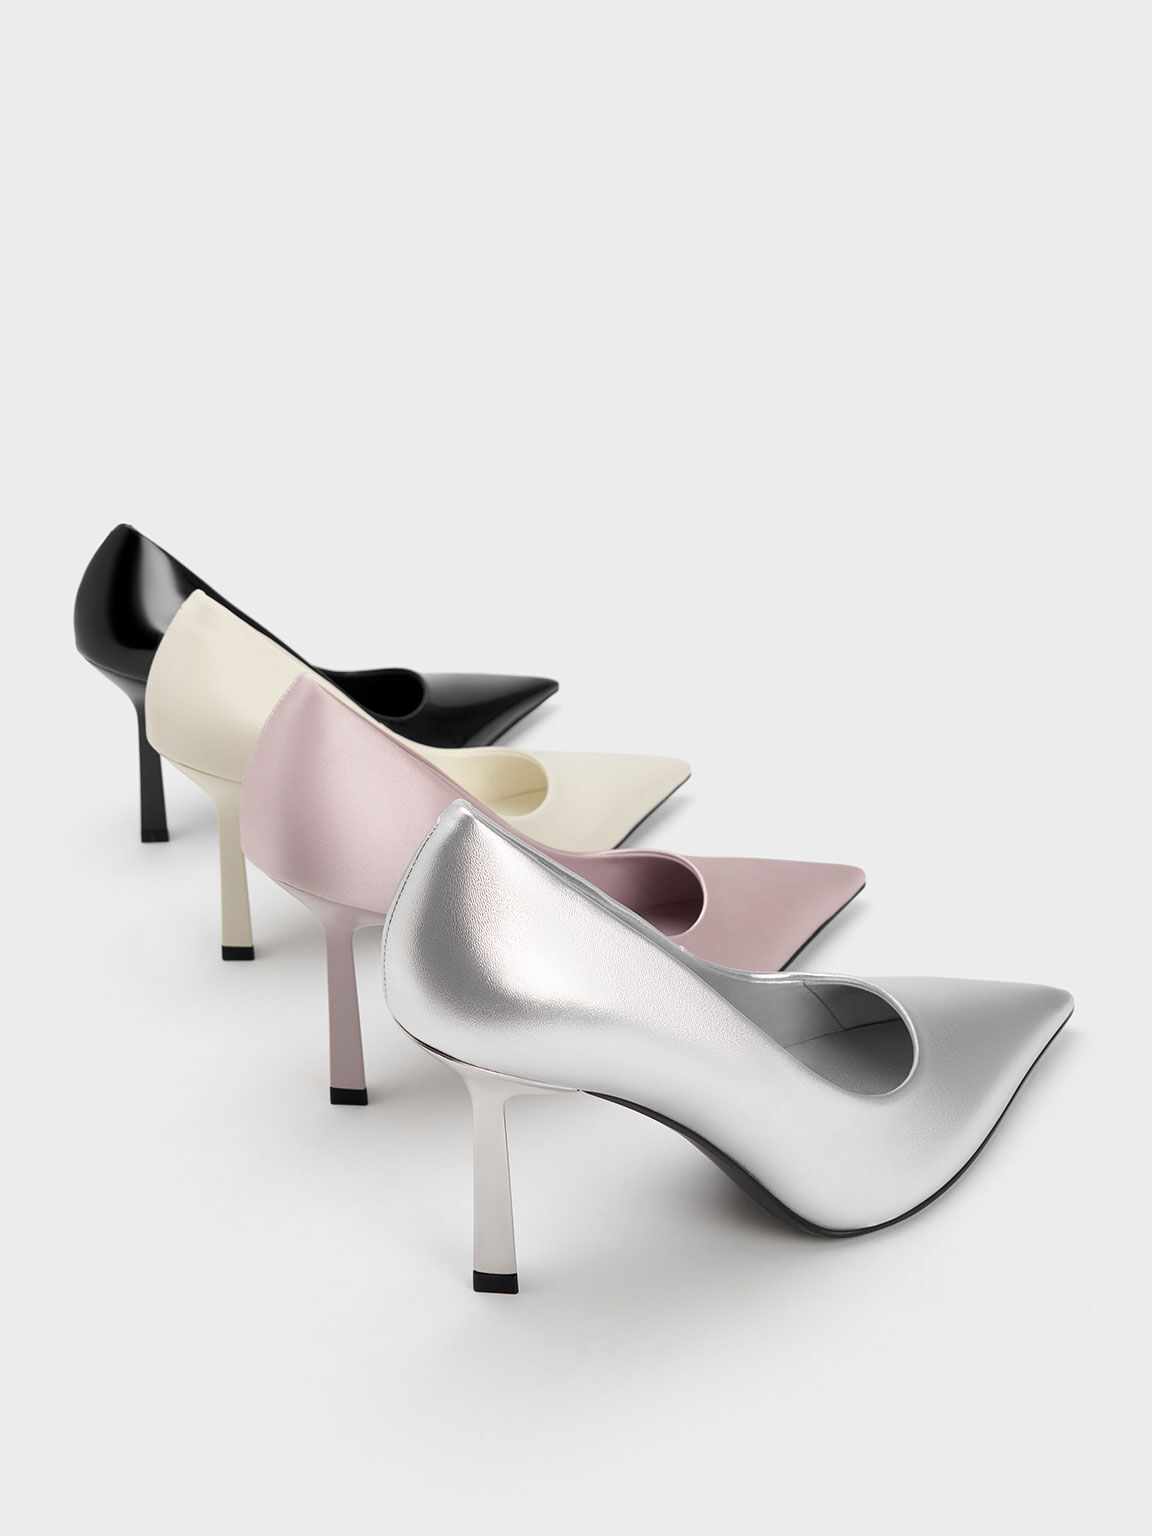 Madison Angelique Classic Block Heel Sandal - Lilac – Shoe Box™ Online Store